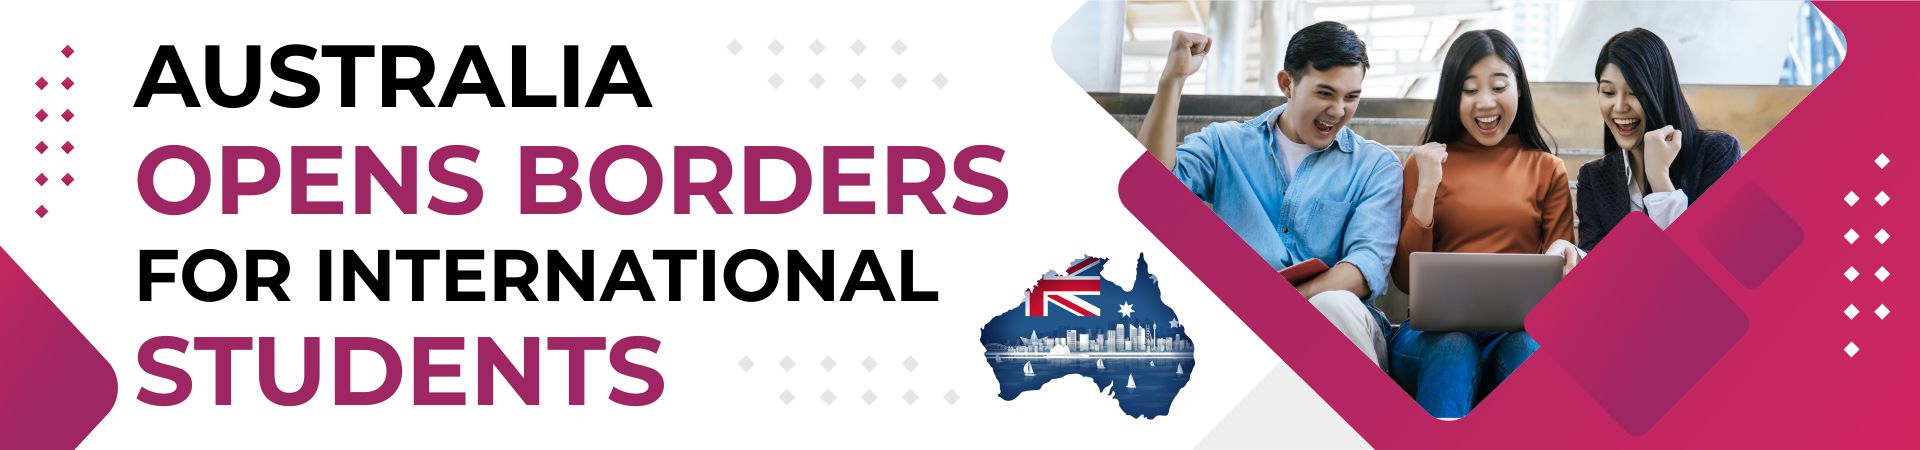 Australia Opens Borders for International Students